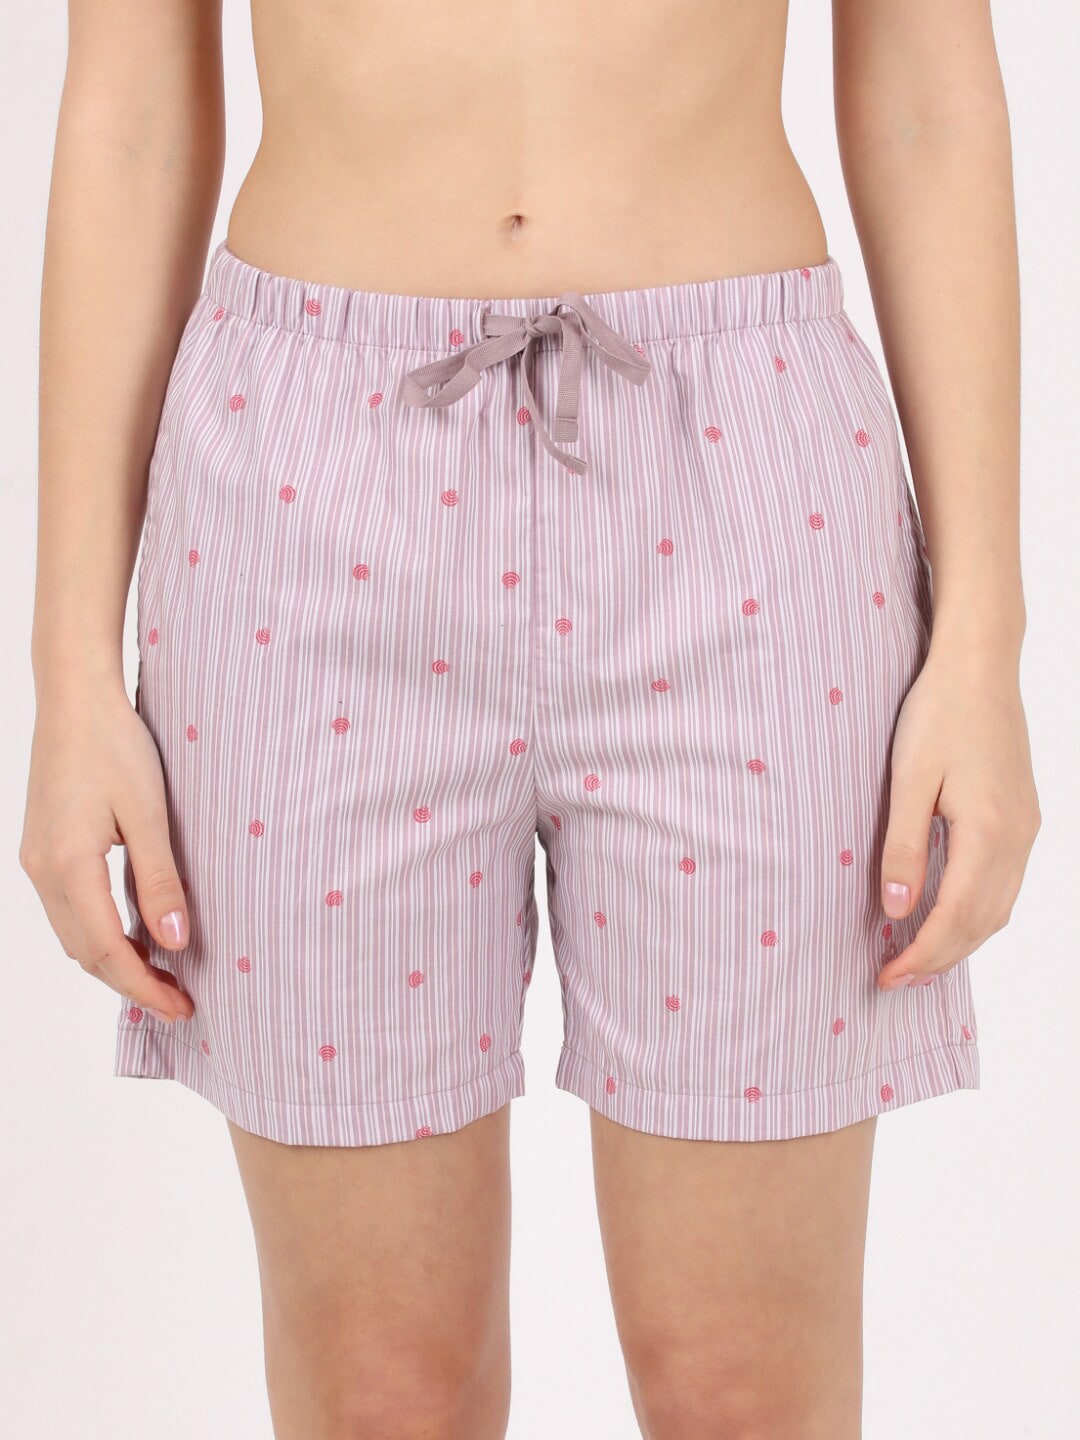 Jockey Women Pink & White Striped Lounge Shorts Price in India